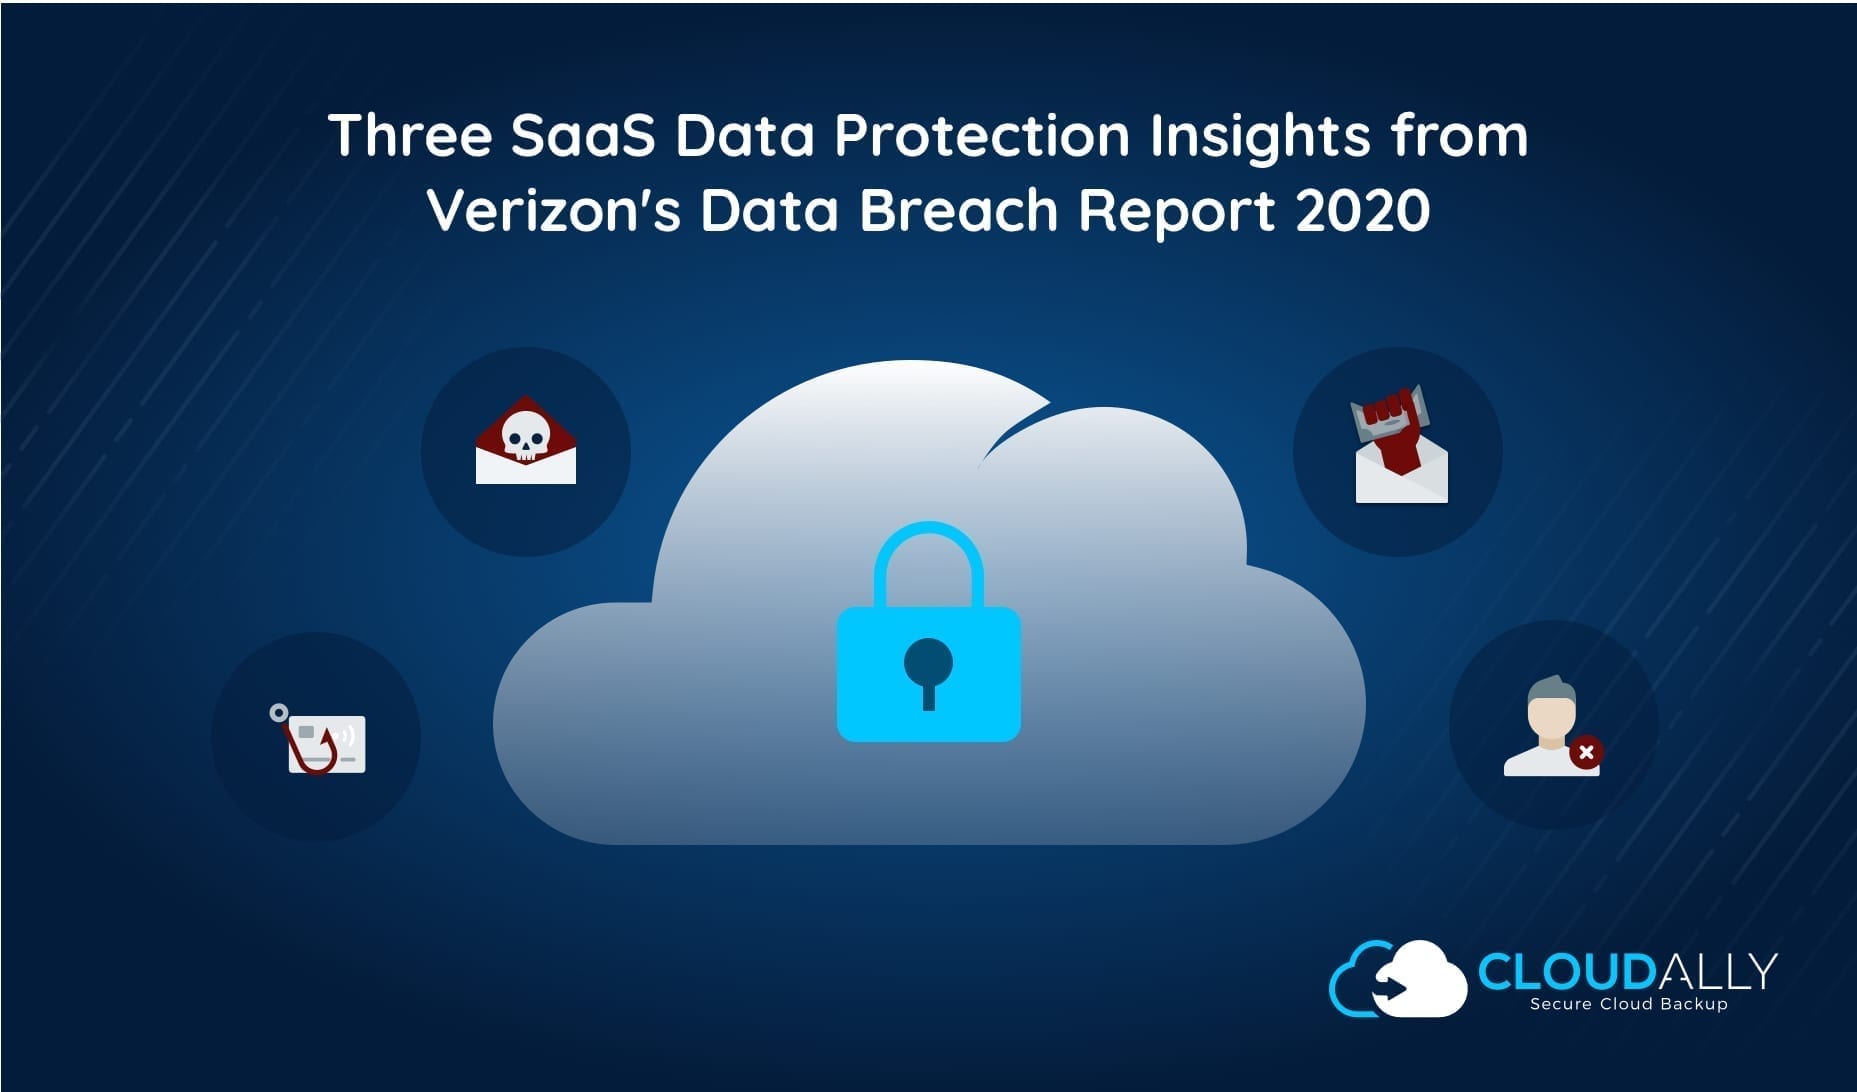 Data Protection Insights Verizon's Data Breach Investigation Report